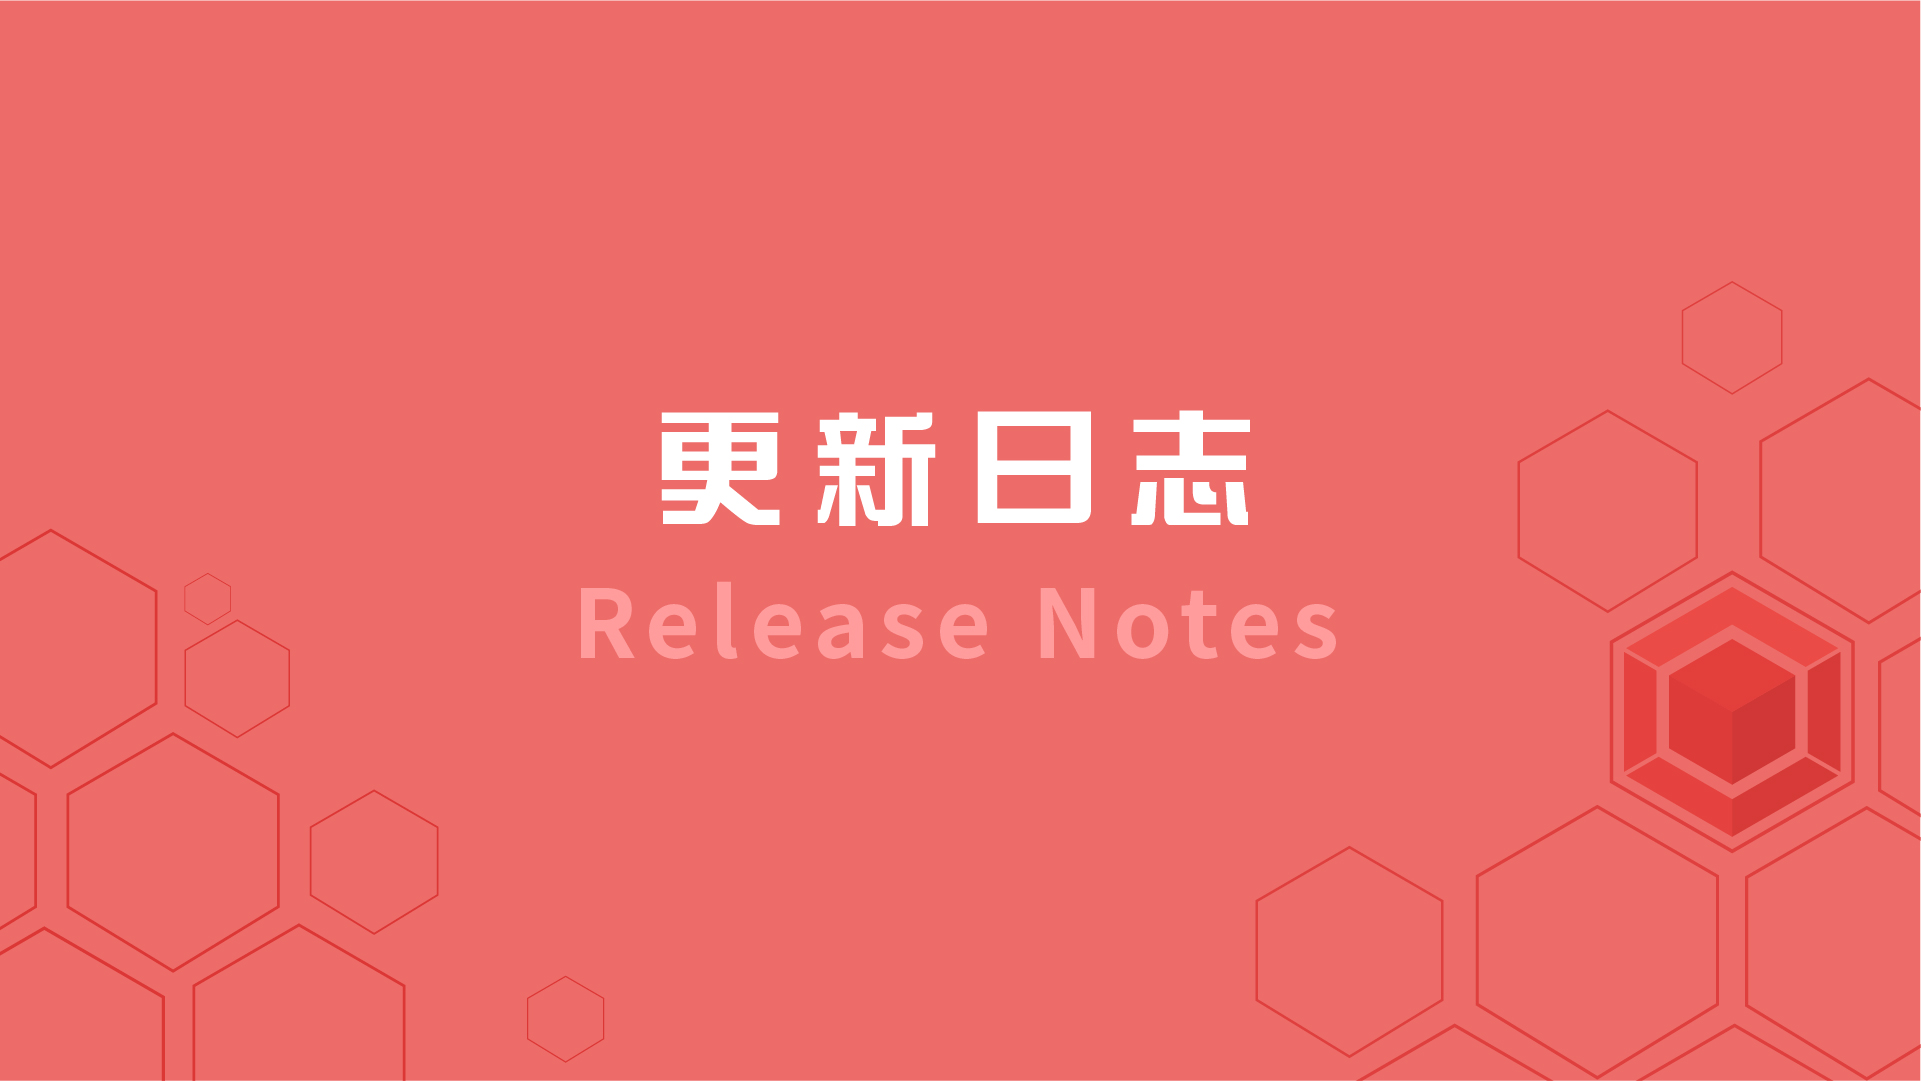 支持集群异常状态诊断及修复，支持Istio，KubeOperator v3.5.0发布丨Release Notes